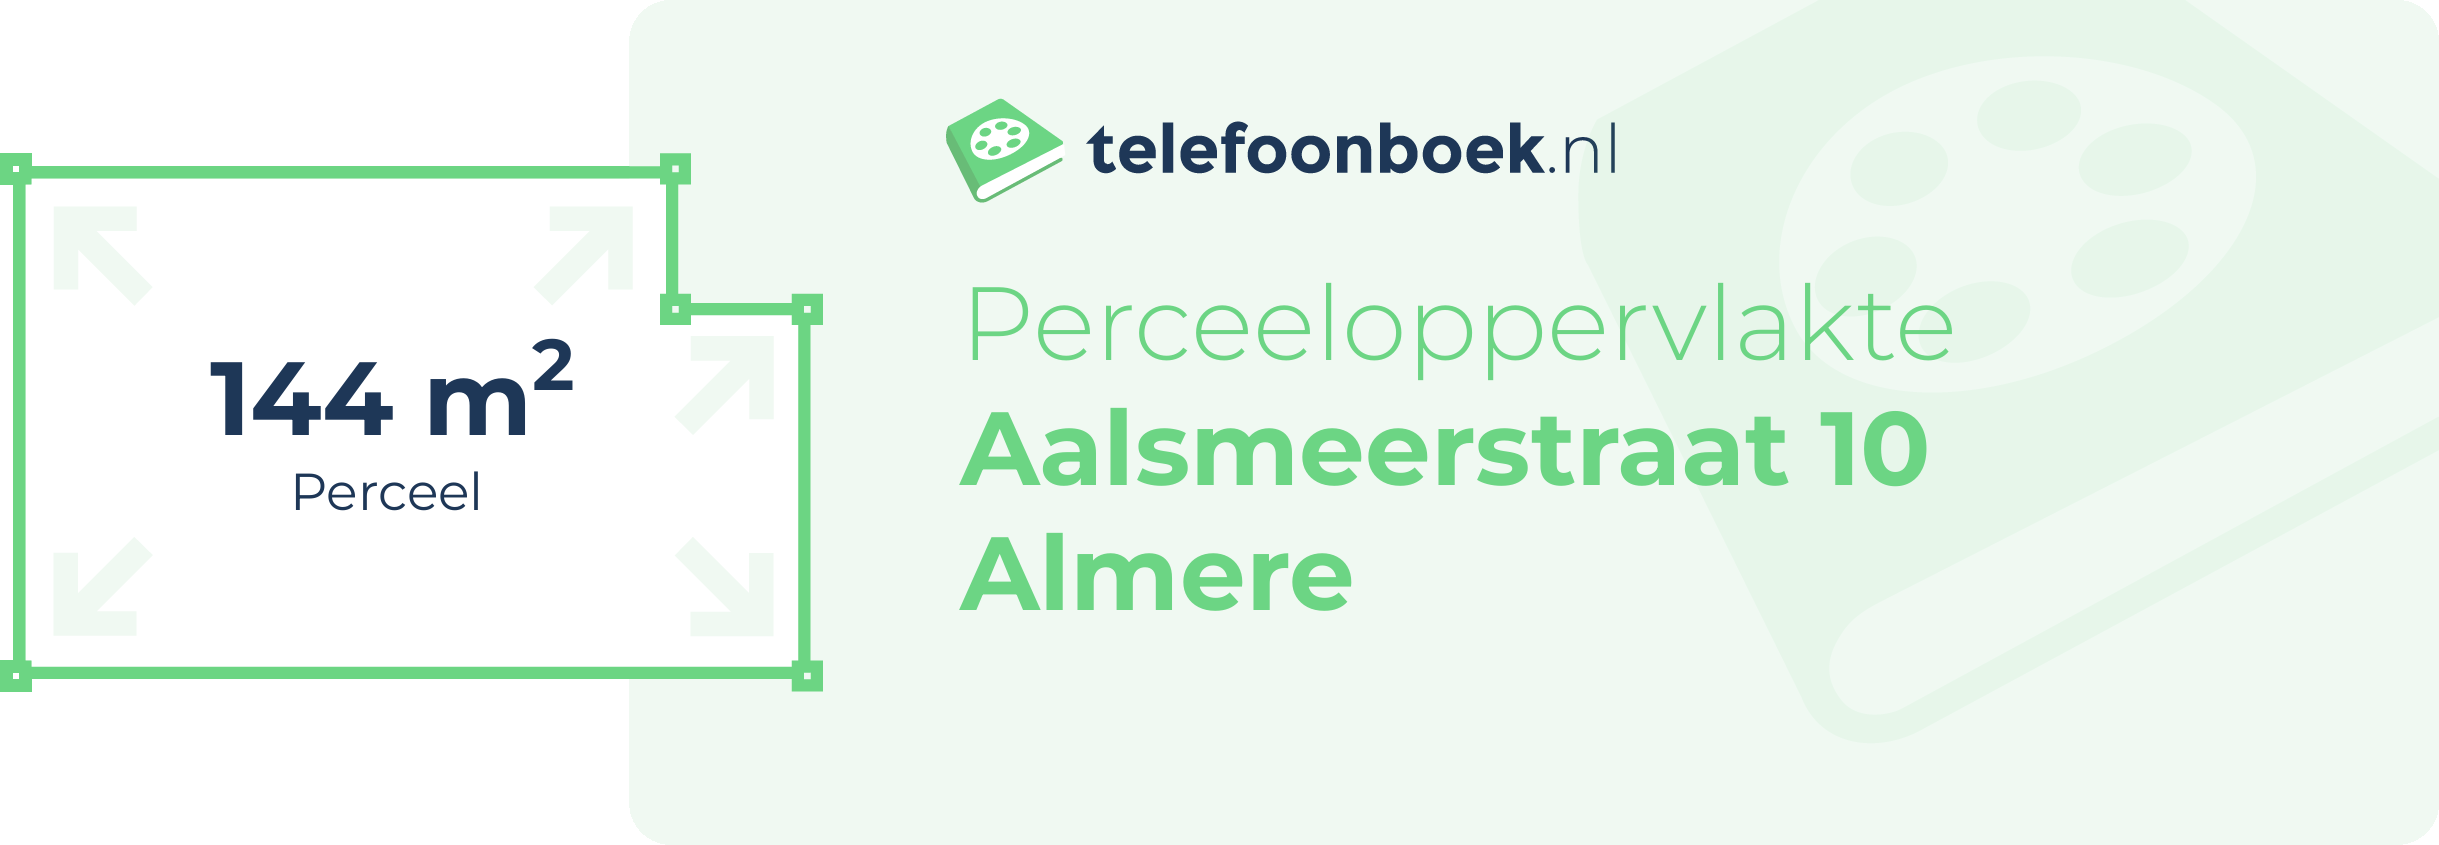 Perceeloppervlakte Aalsmeerstraat 10 Almere